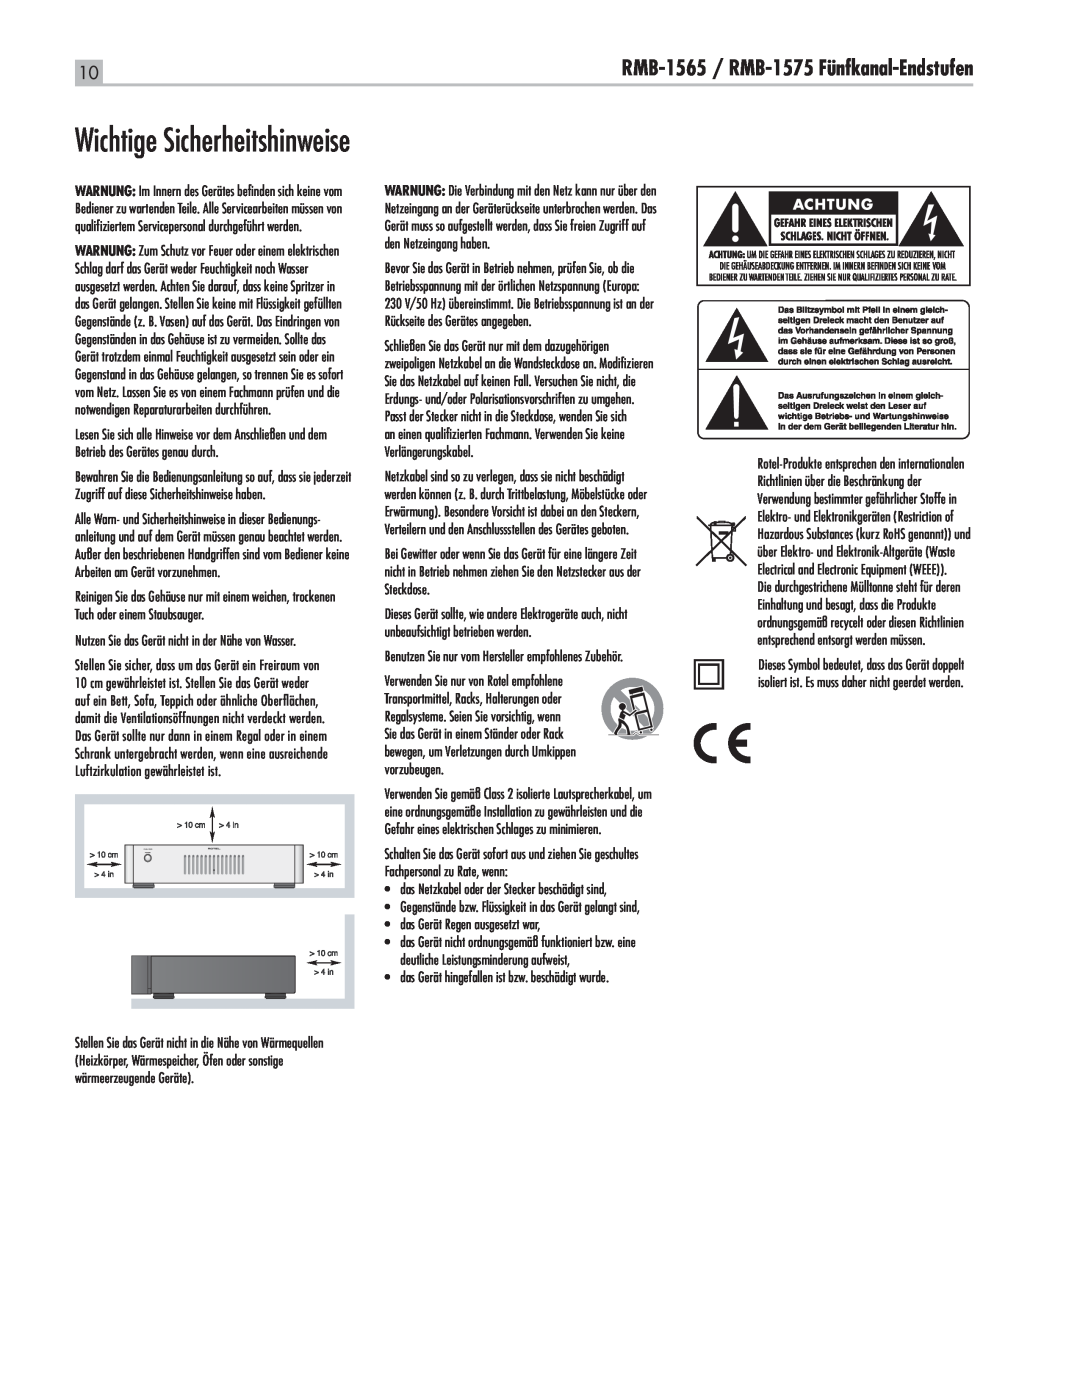 Rotel RMB1575BK manual Wichtige Sicherheitshinweise, RMB-1565 / RMB-1575 Fünfkanal-Endstufen 